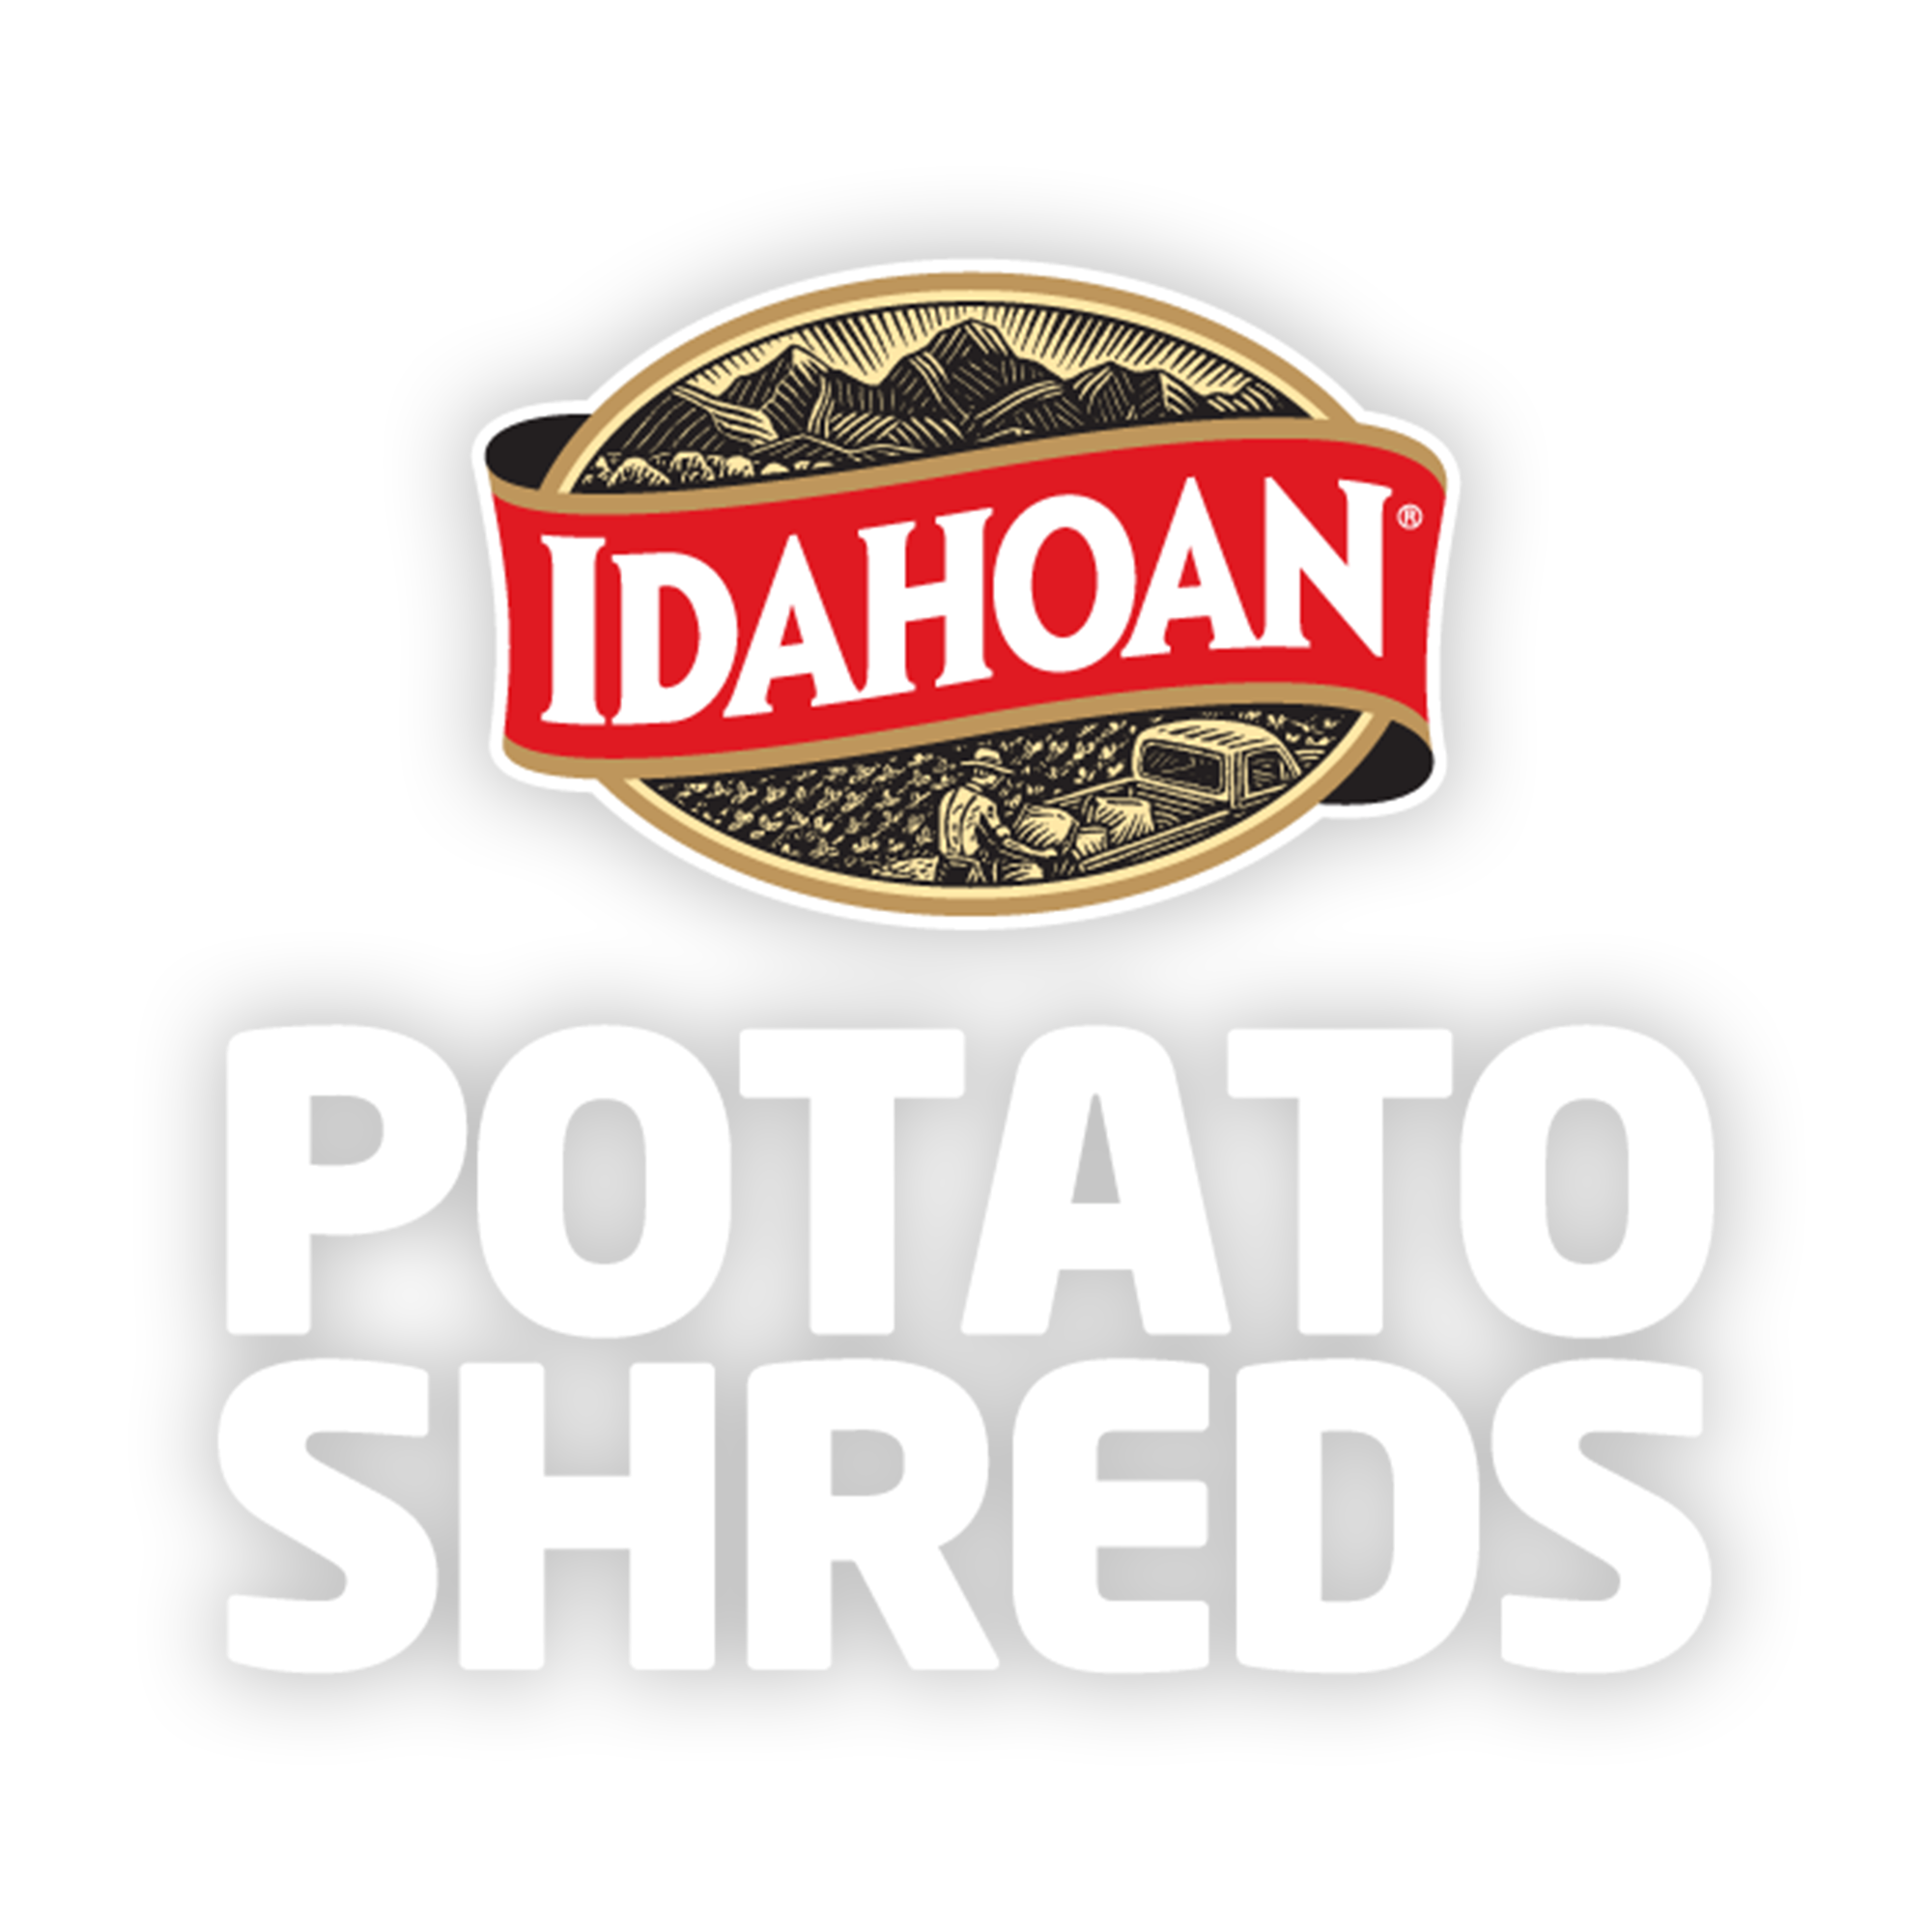 Idahoan Foods Idahoan Foods Original Mashed Potato Flakes 5lbs Pouch, PK6  2970000203